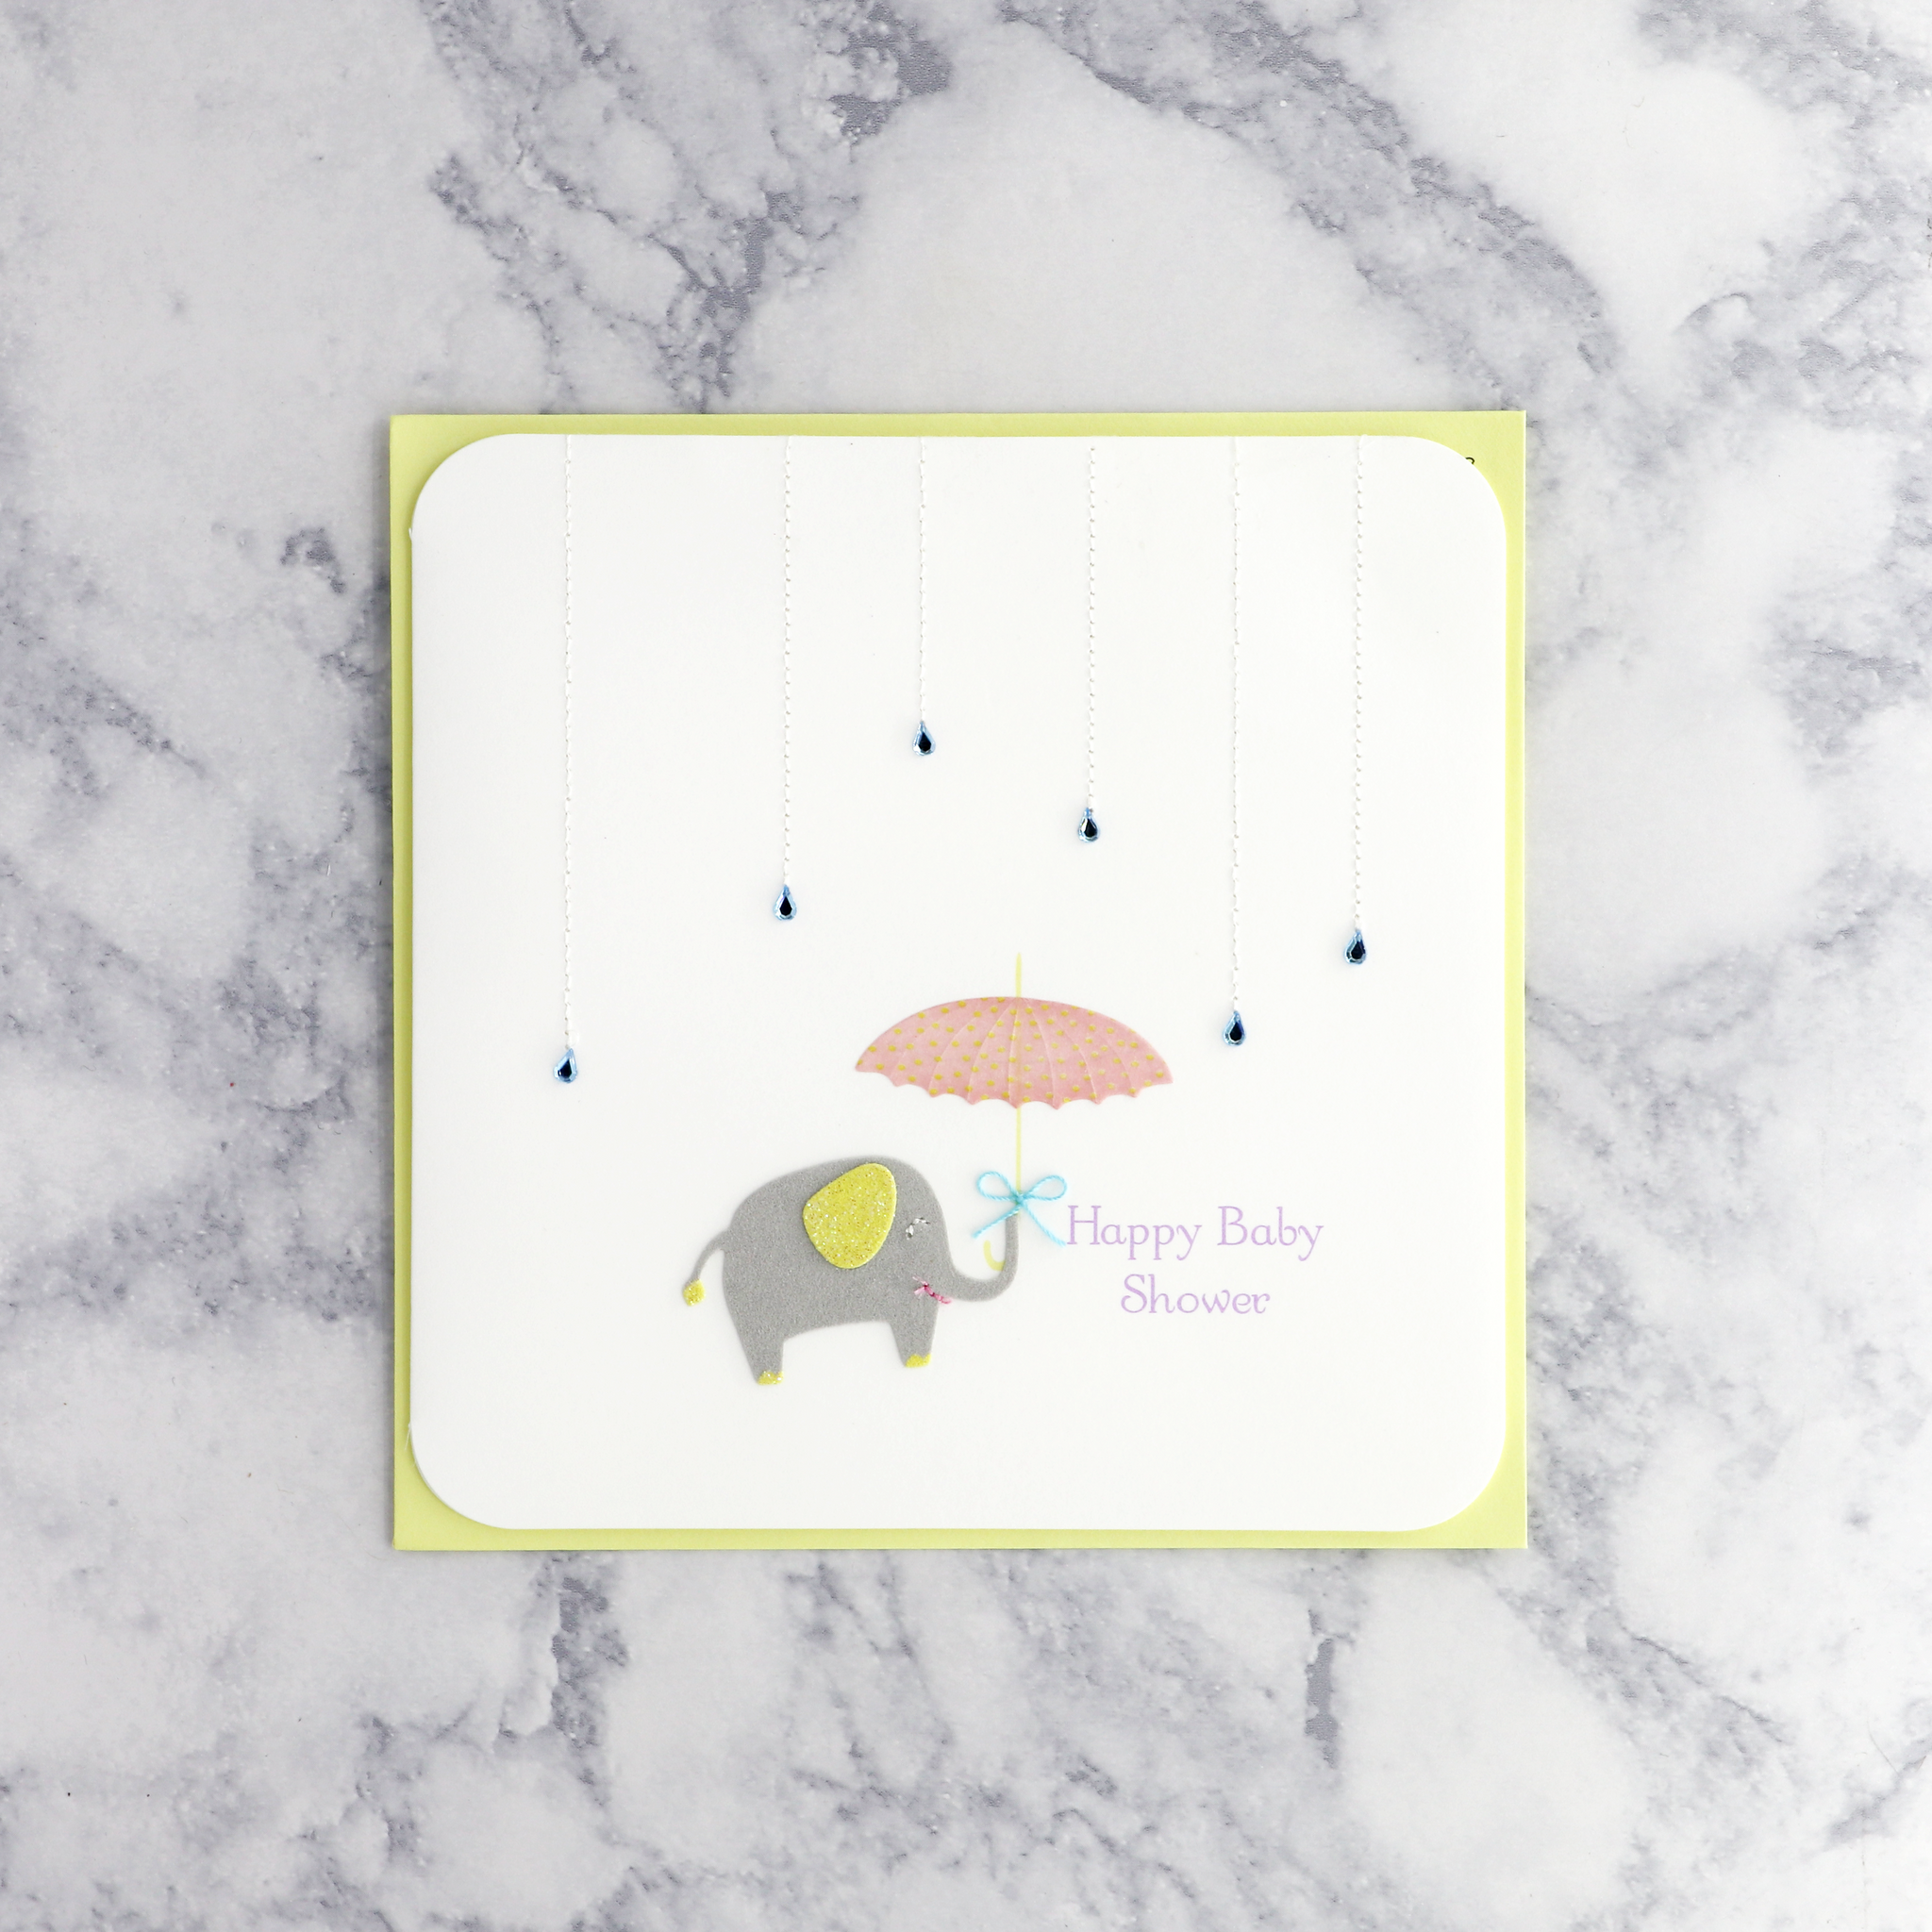 Raindrops, Umbrella & Elephant Baby Shower Card